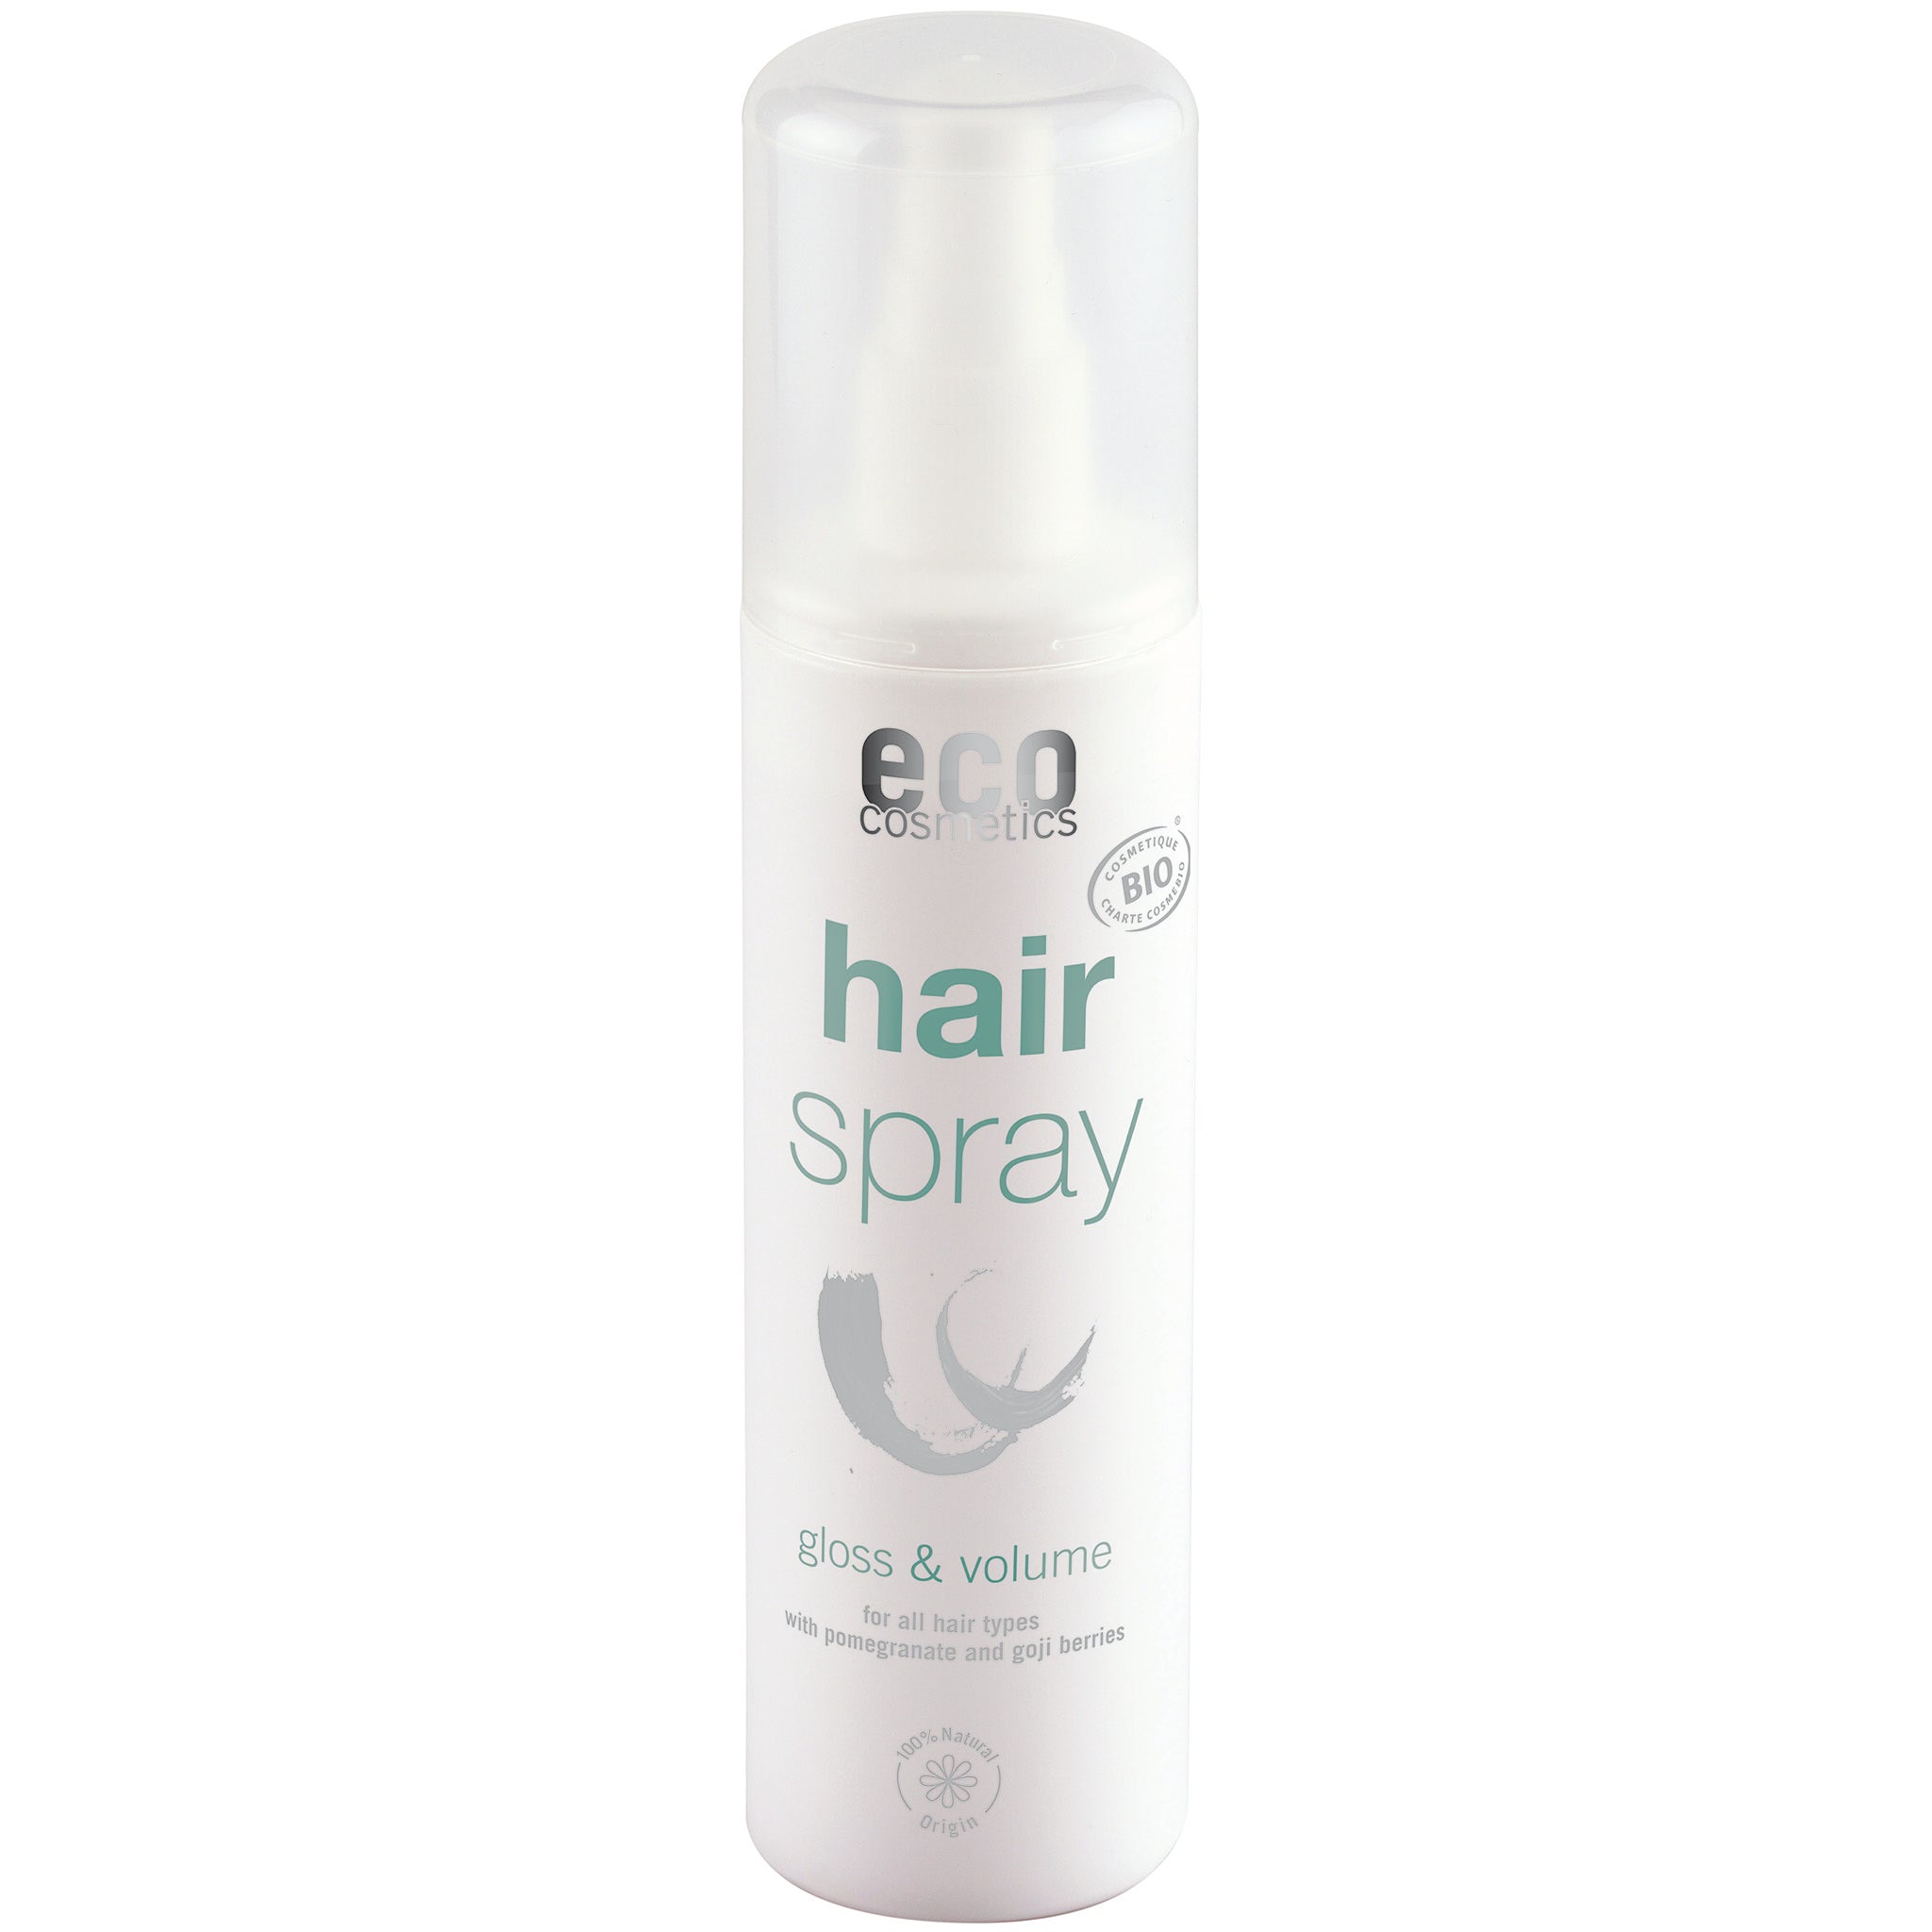 Hair Spray - mypure.co.uk